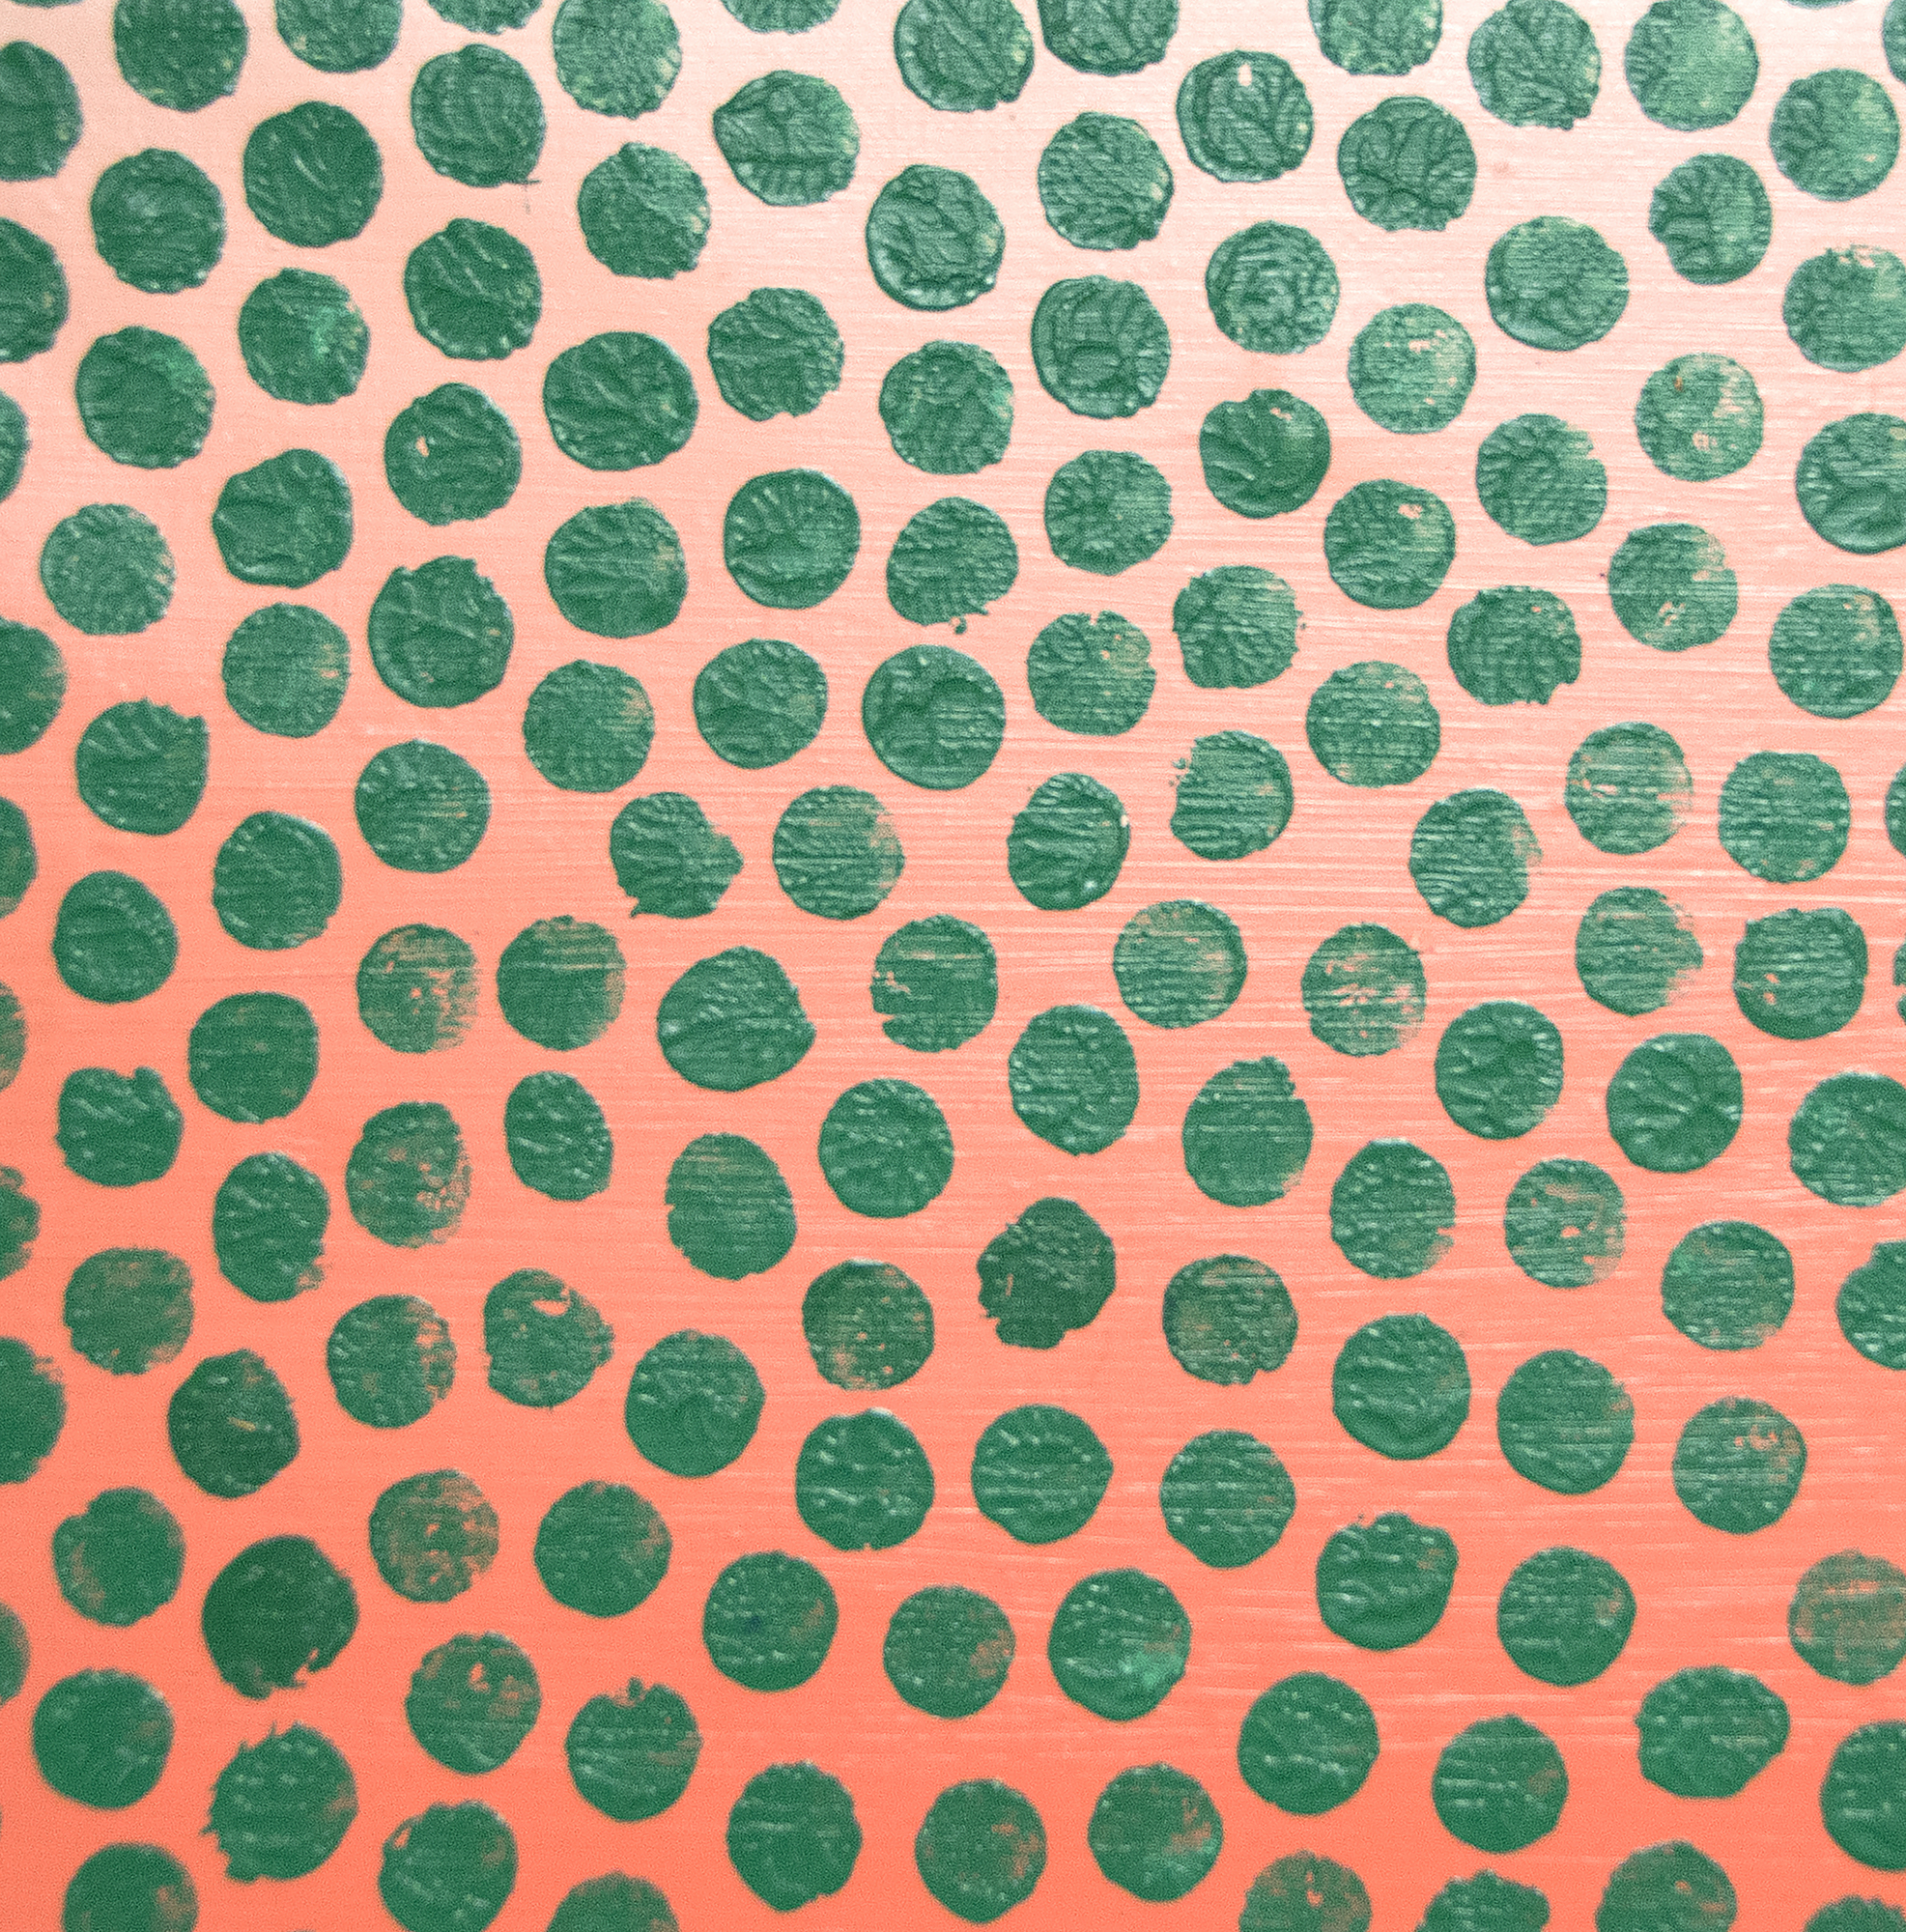 WOJCIECH FANGOR - Grüne Punkte - Öl auf Leinwand - 52 7/8 x 33 1/2 in.